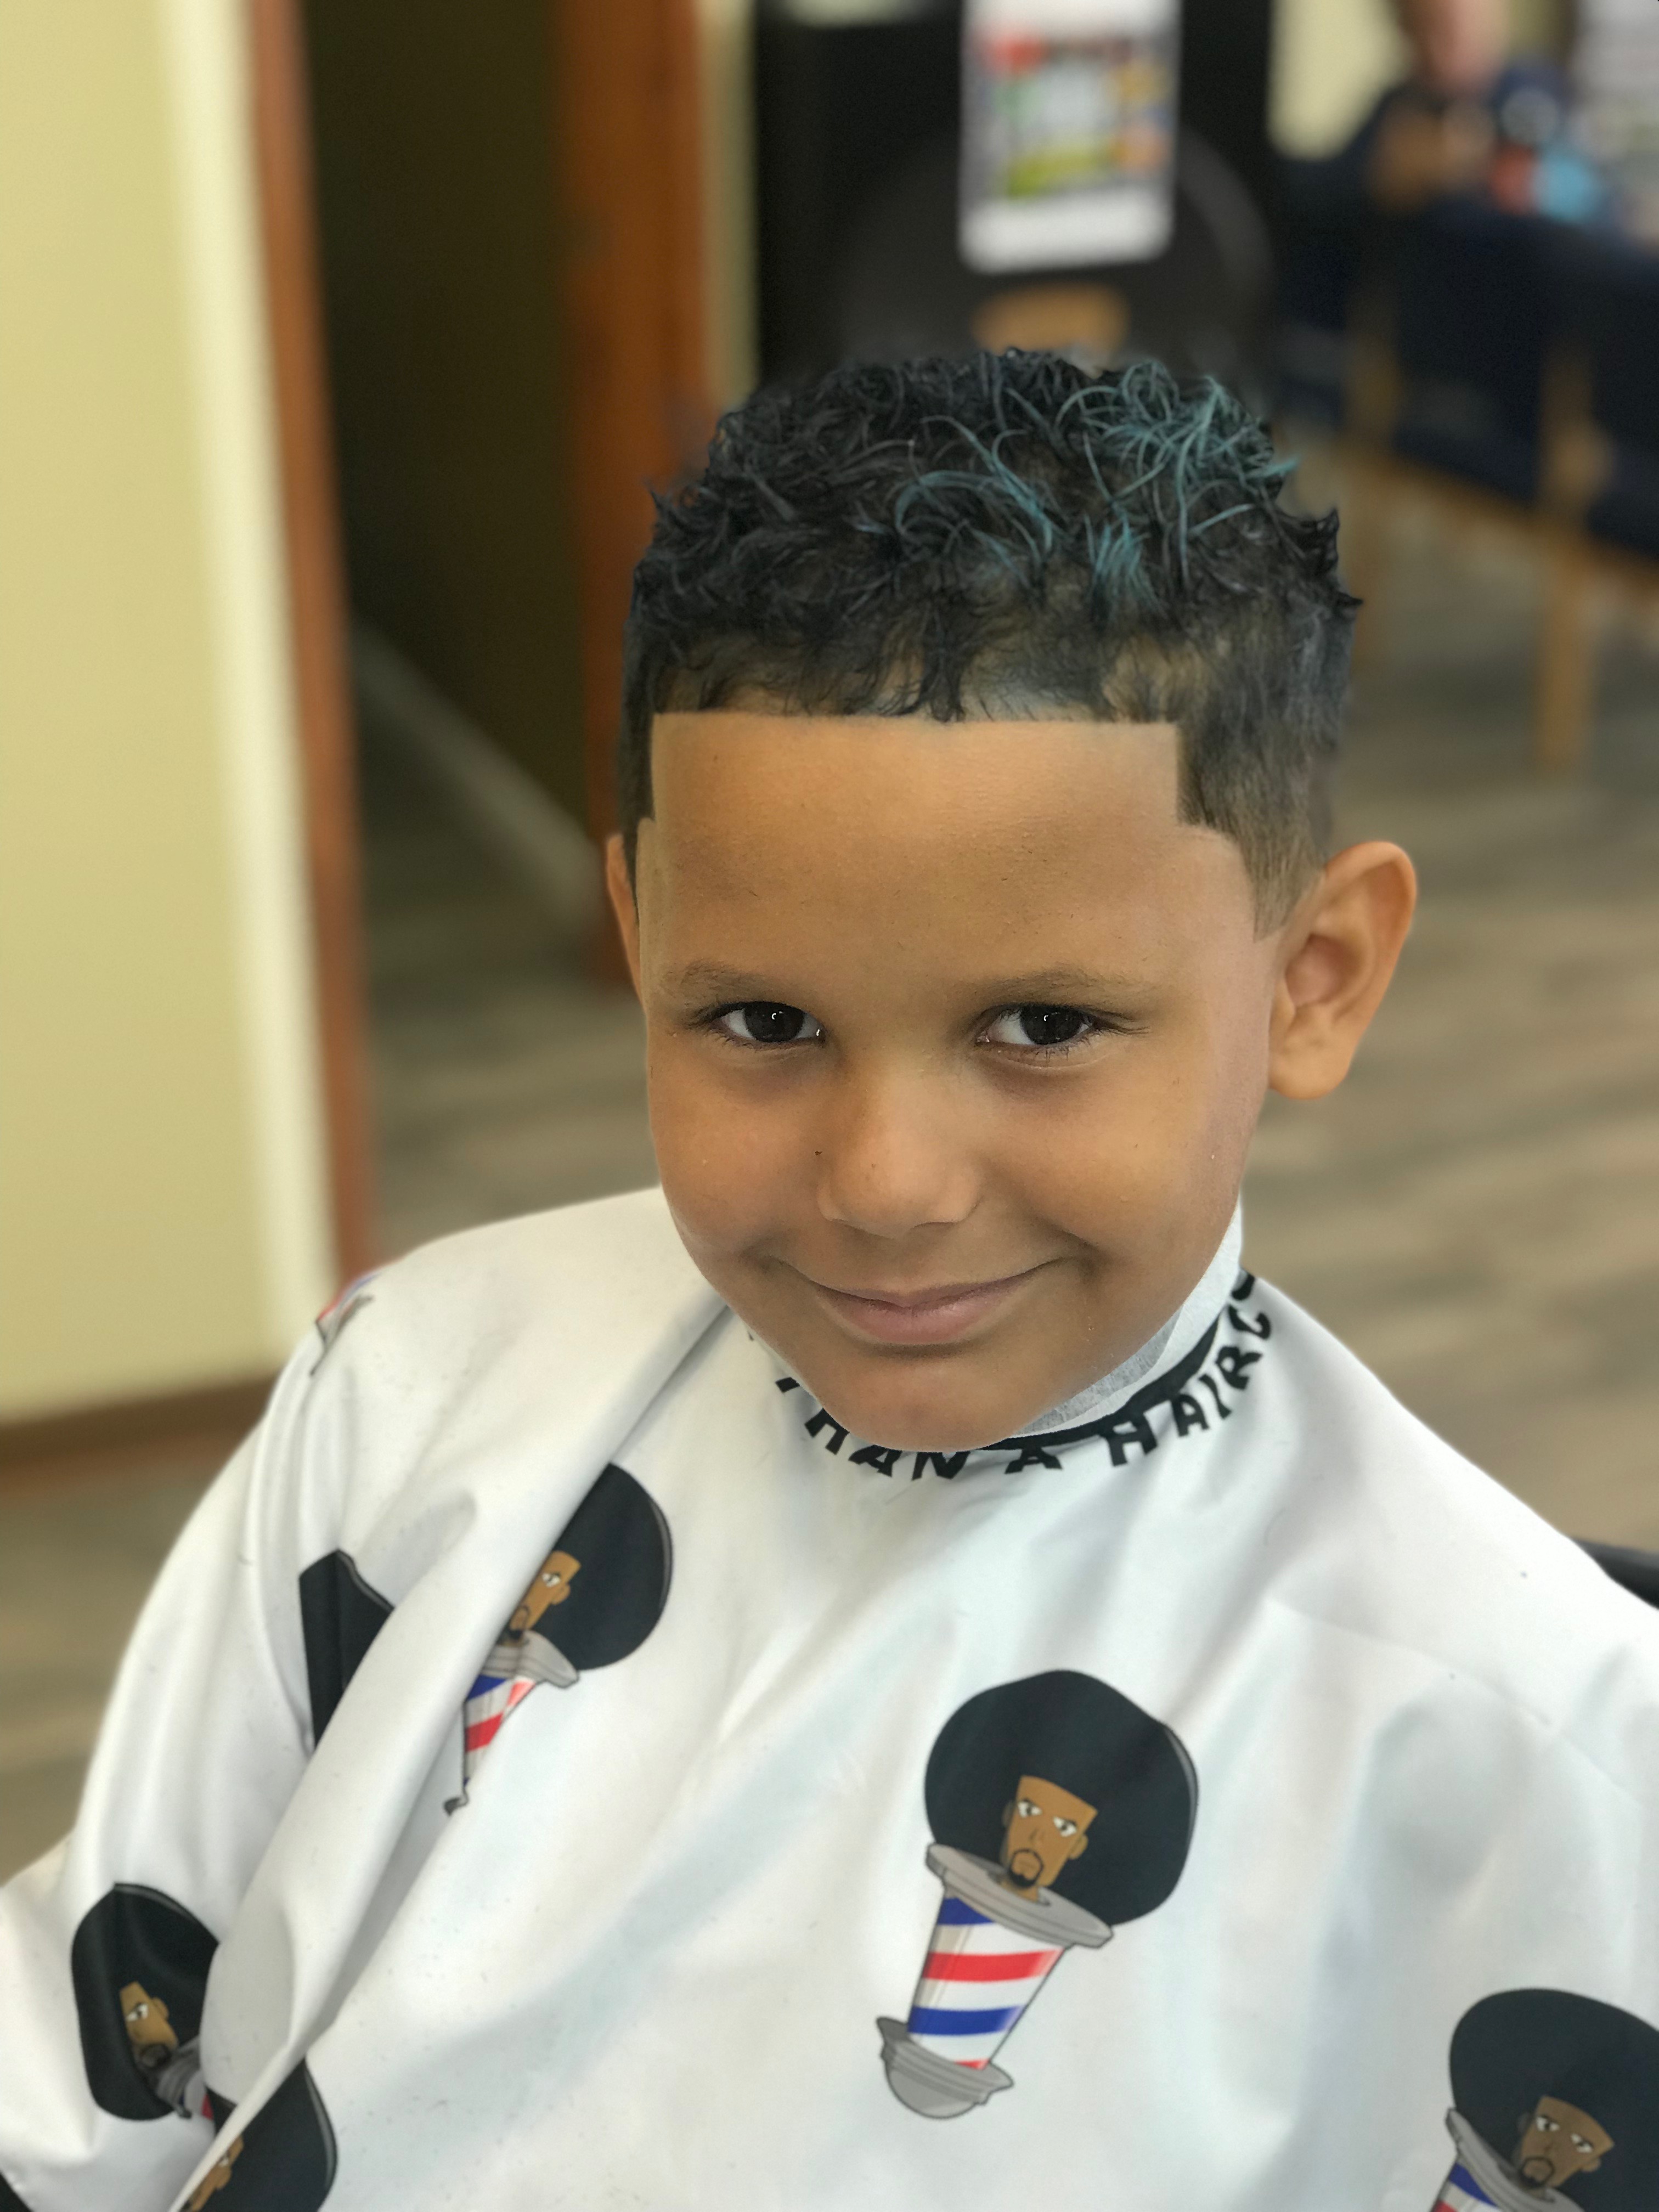 Pearland Barbershop: A great haircut can boost a student's self-esteem &  grades - Joe Black Barbershop